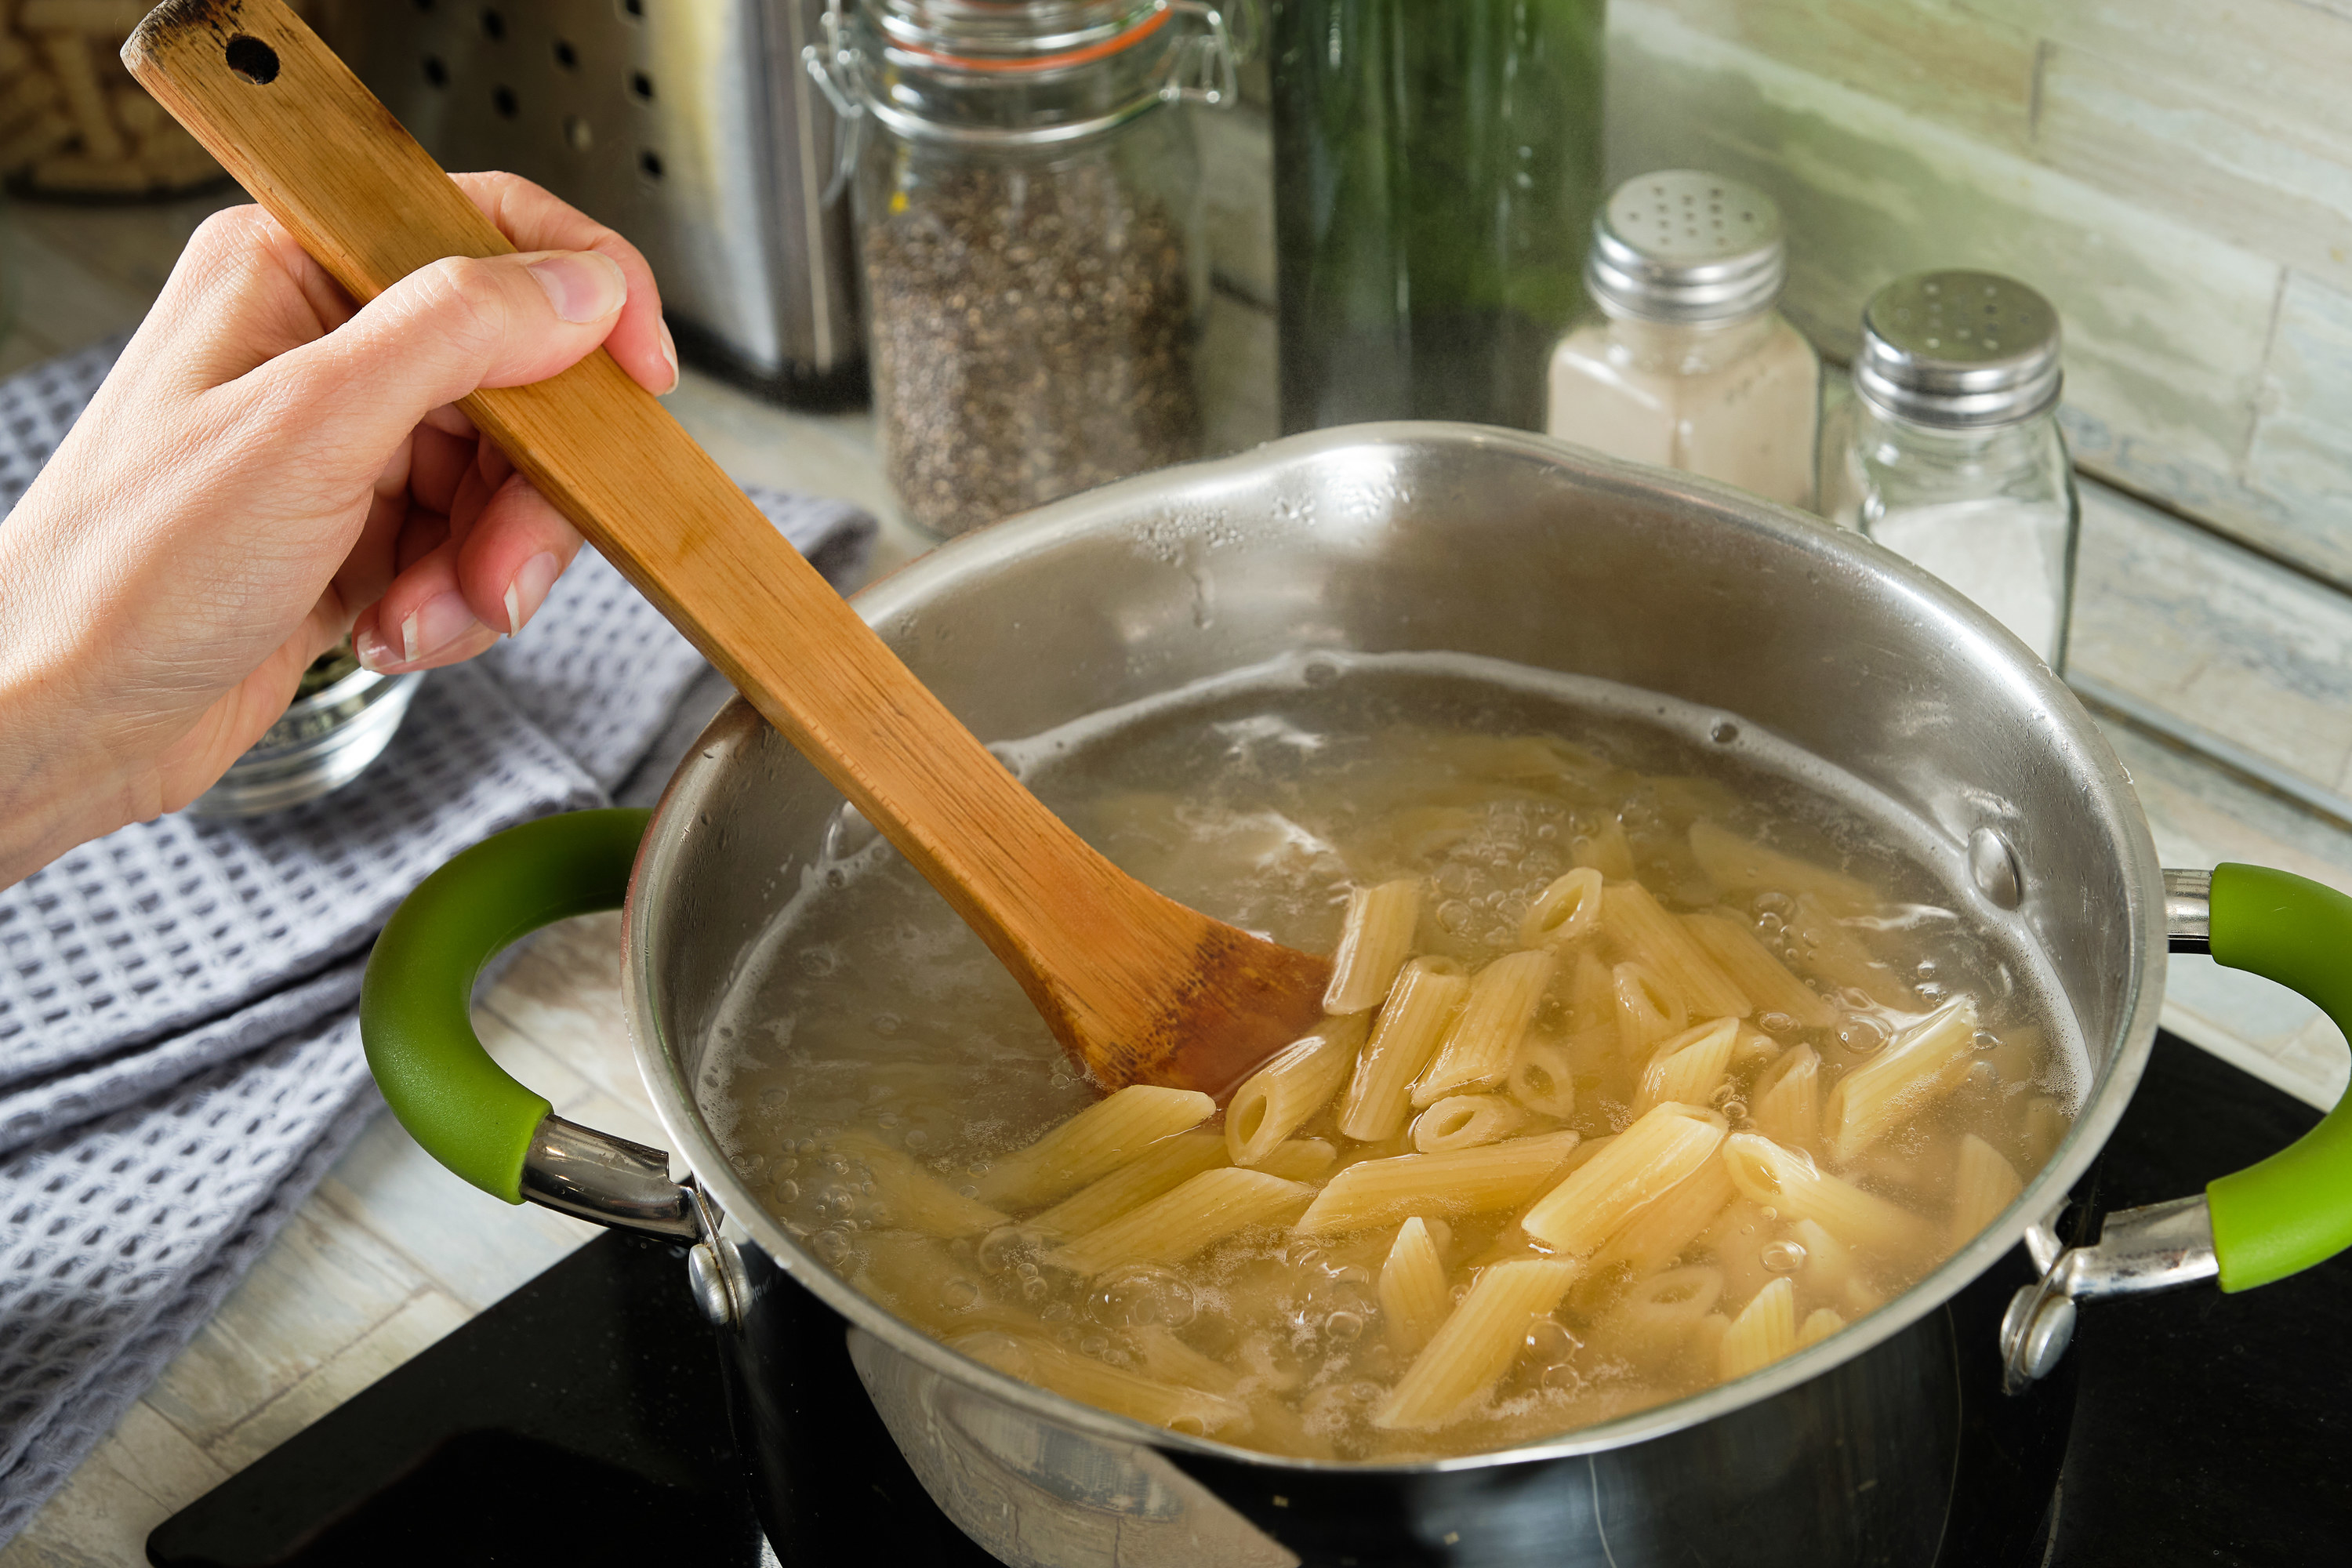 Stirring a pot of pasta